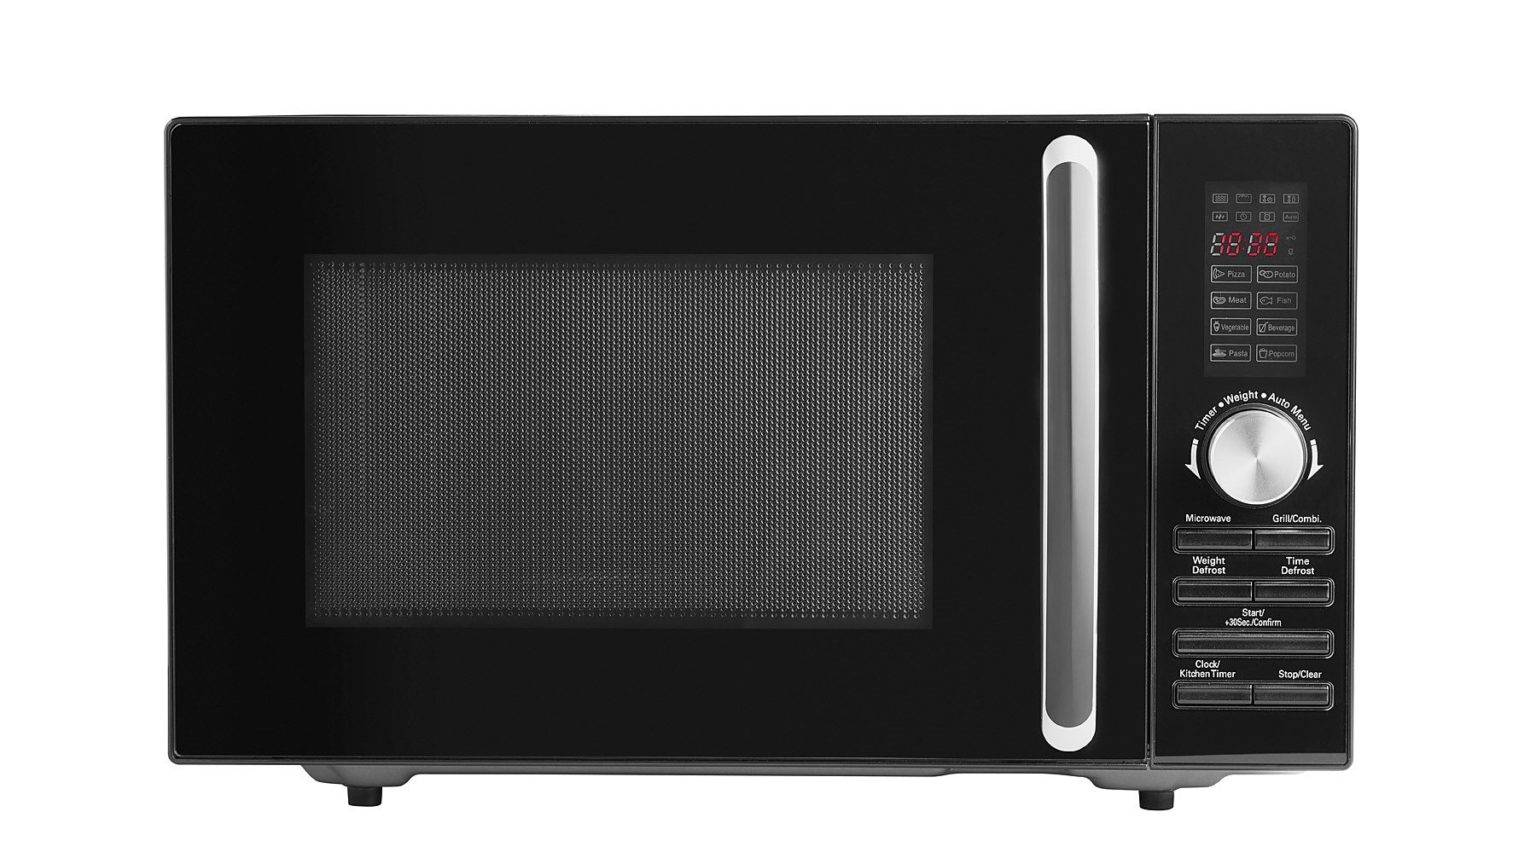 Digital Black Microwave Asda and Grill